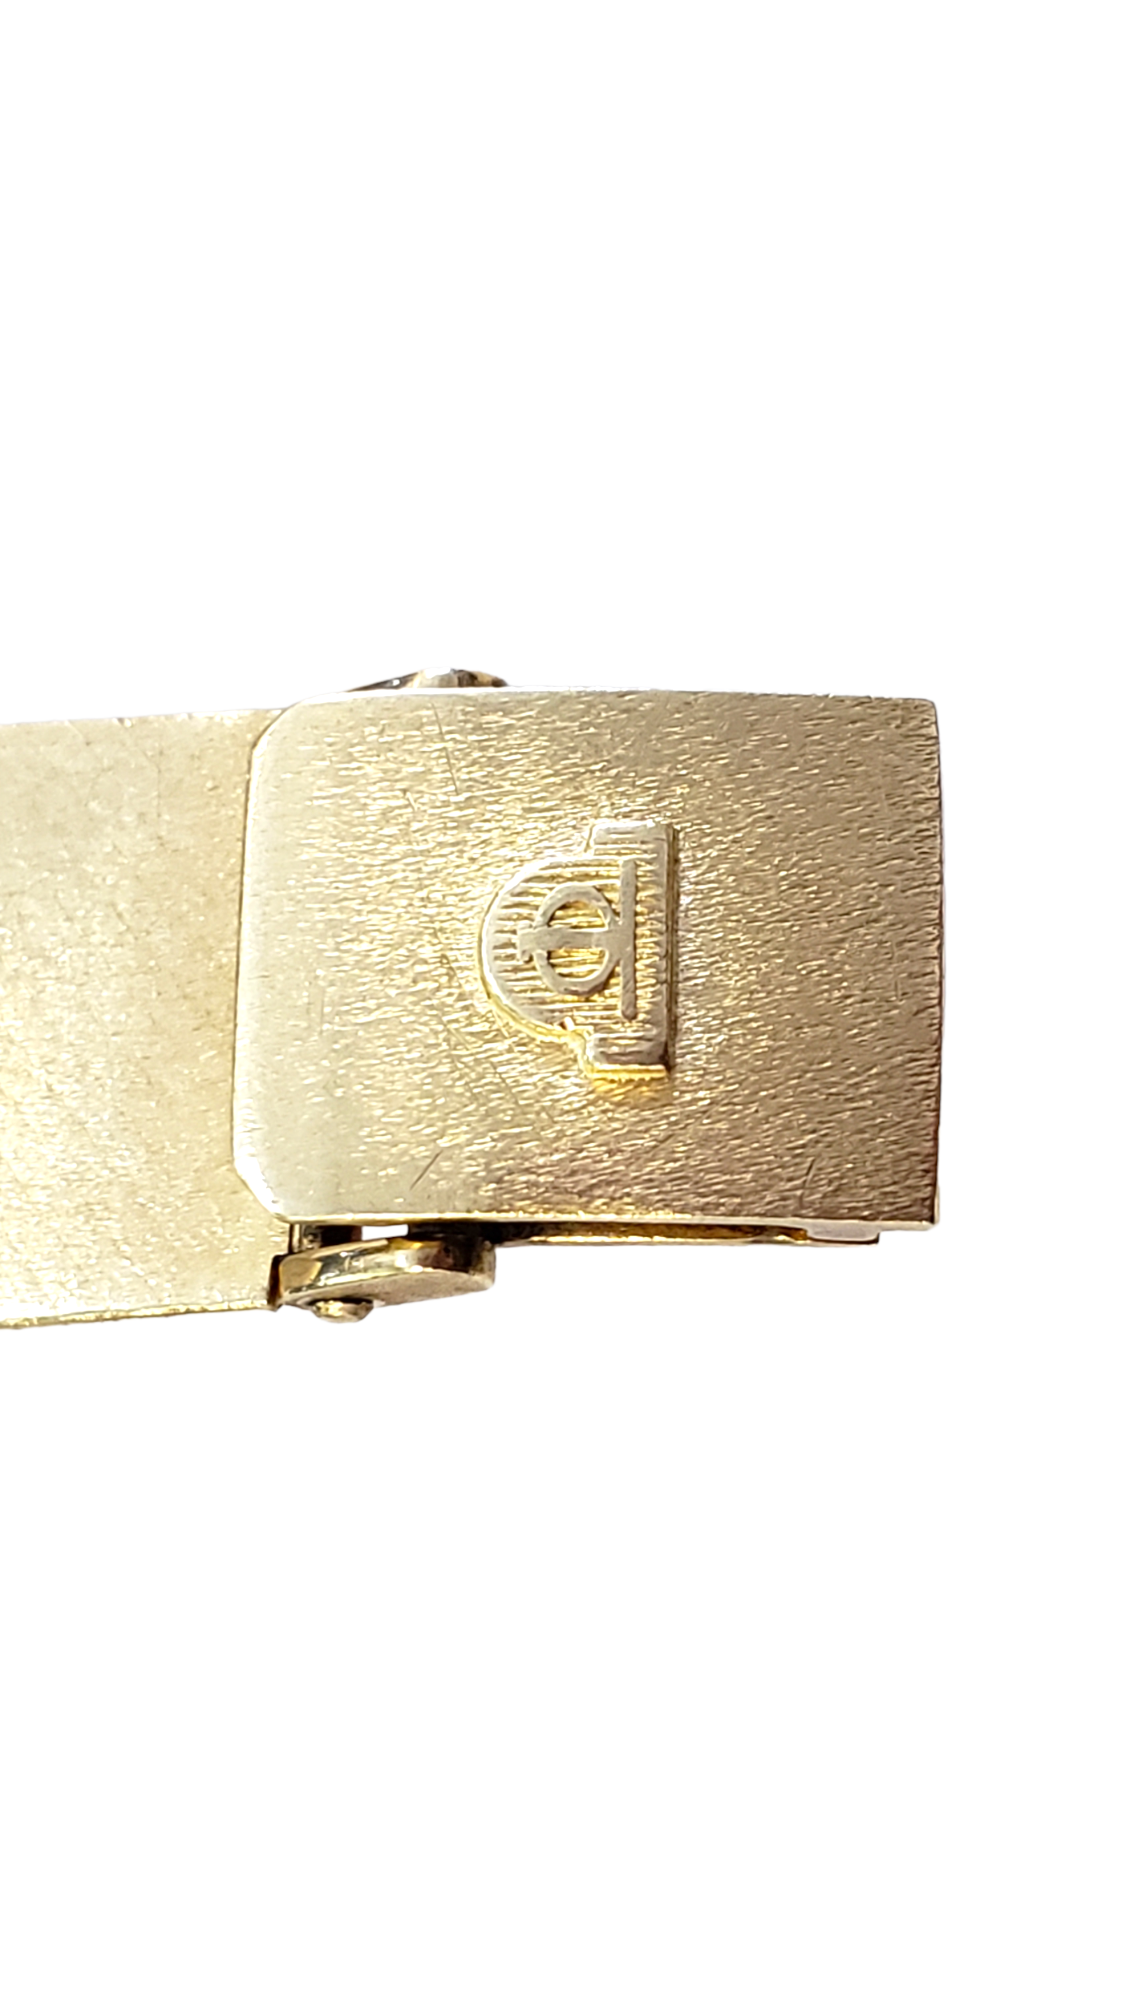 Vintage 18K Yellow Gold Baume & Mercier Genève Women's Wrist Watch